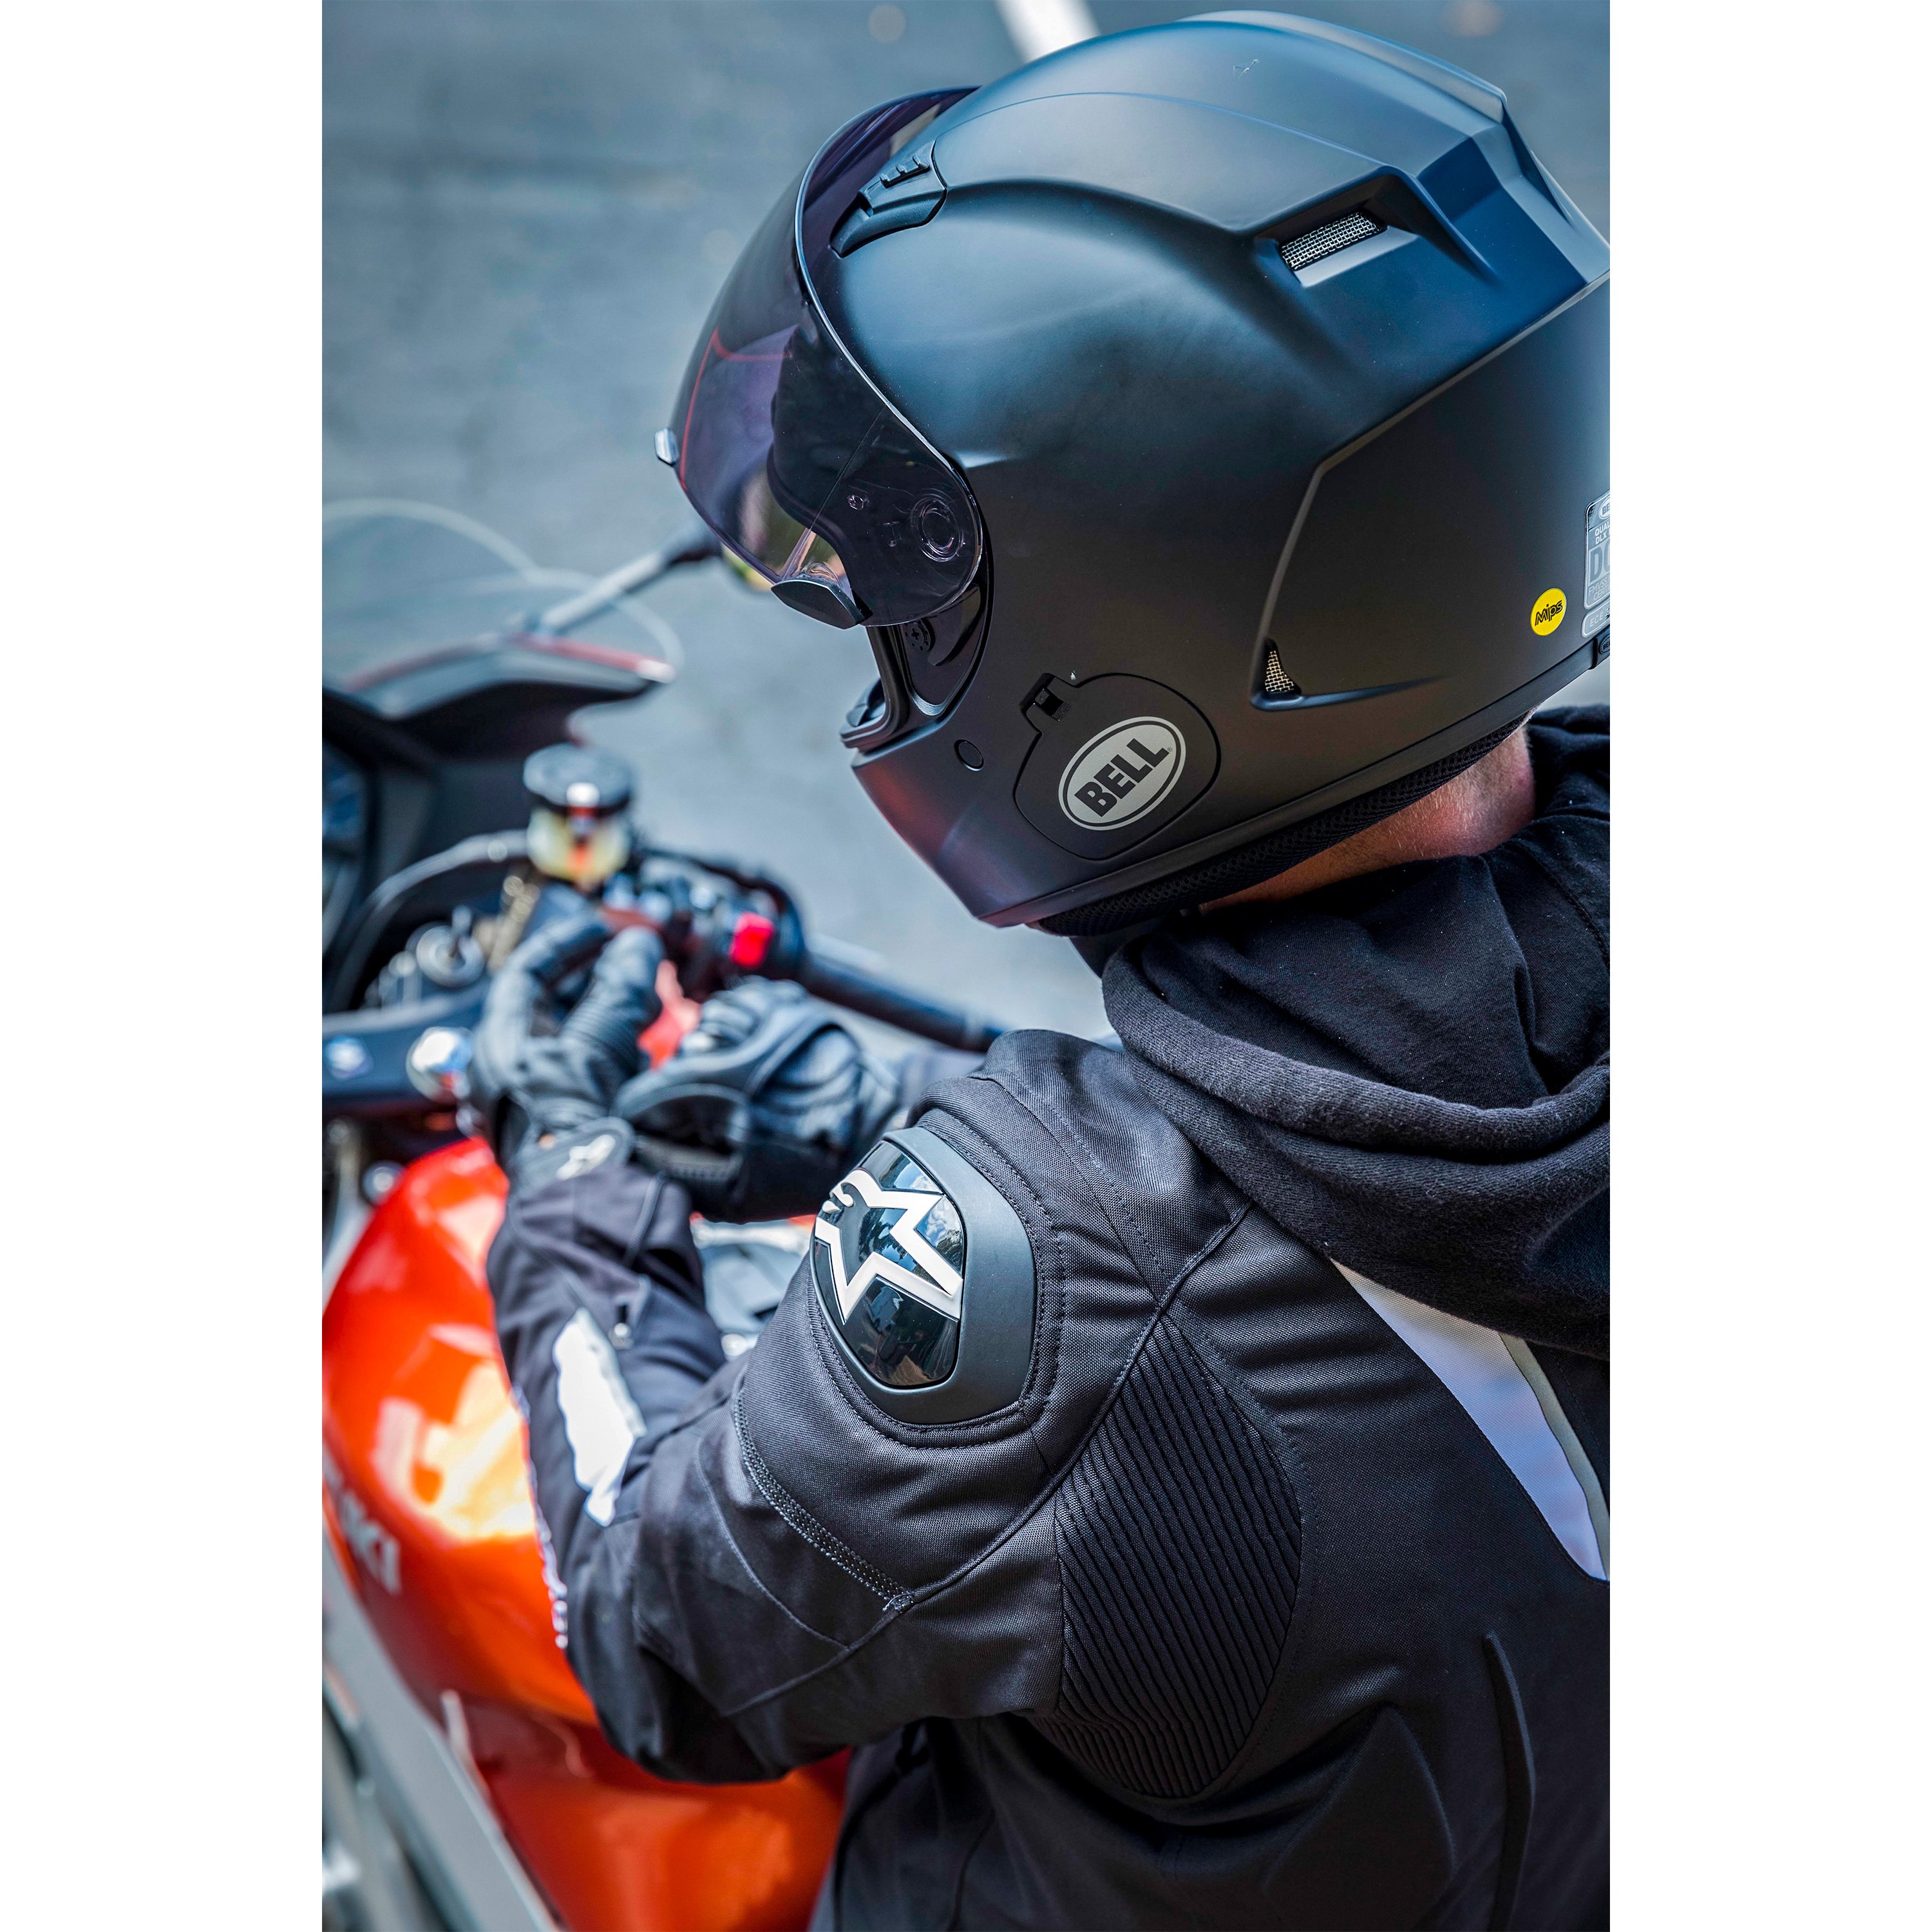 New Bell Qualifier DLX Blackout Helmet Unisex M Black #7085217 